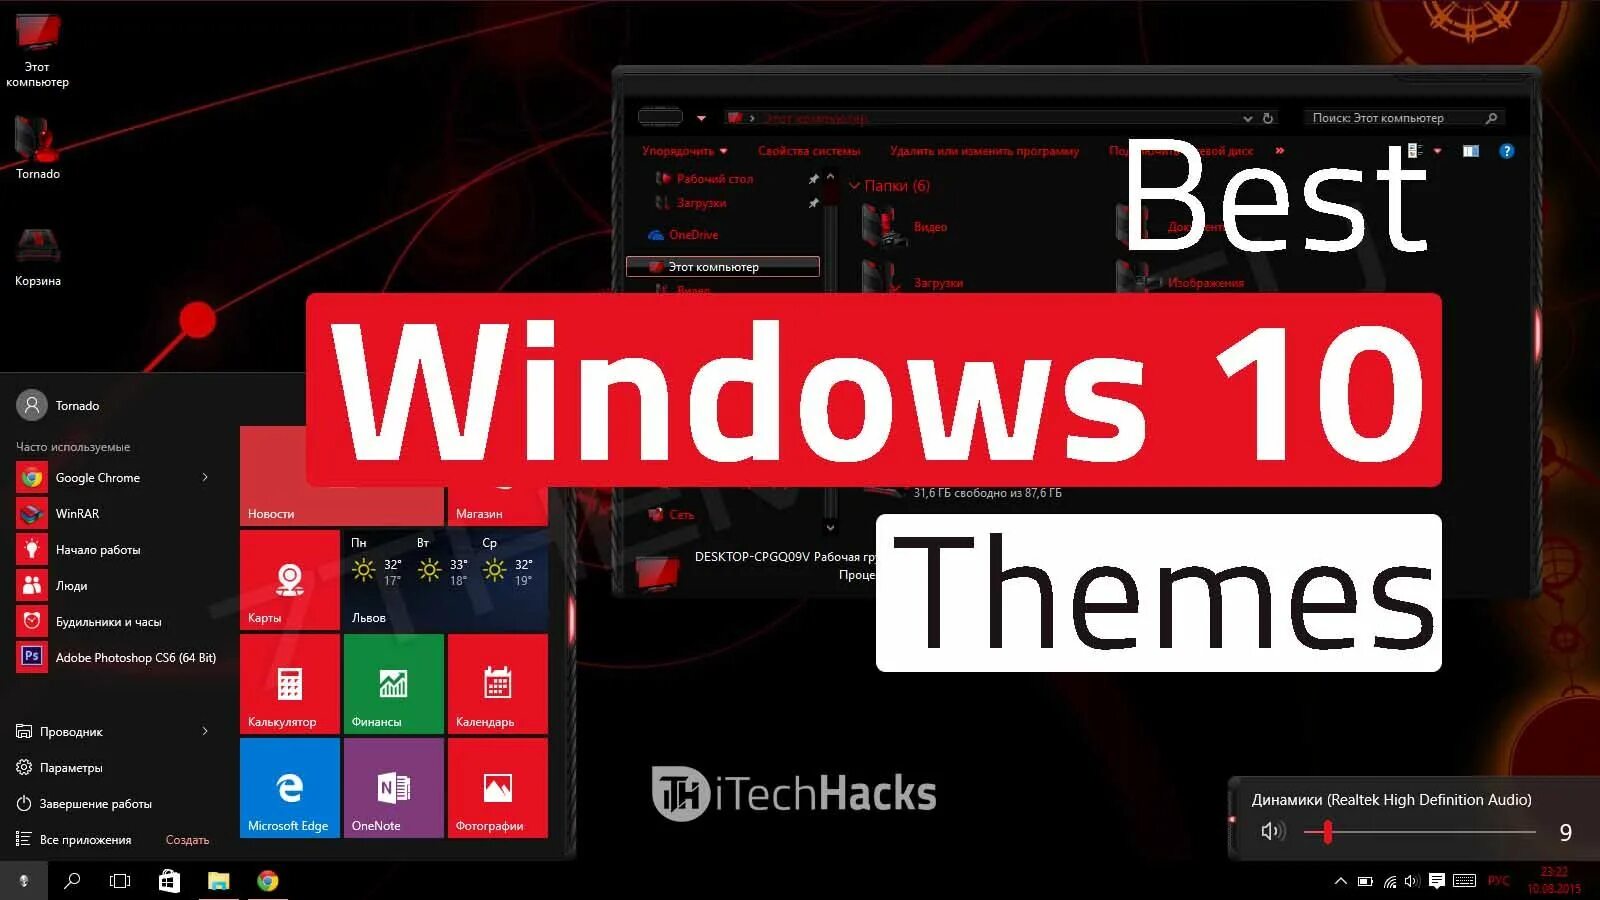 Best themes. Windows 10 Themes. Windows 10 темы 2020. Windows Themes for Windows 10. Best Windows 10 Themes.